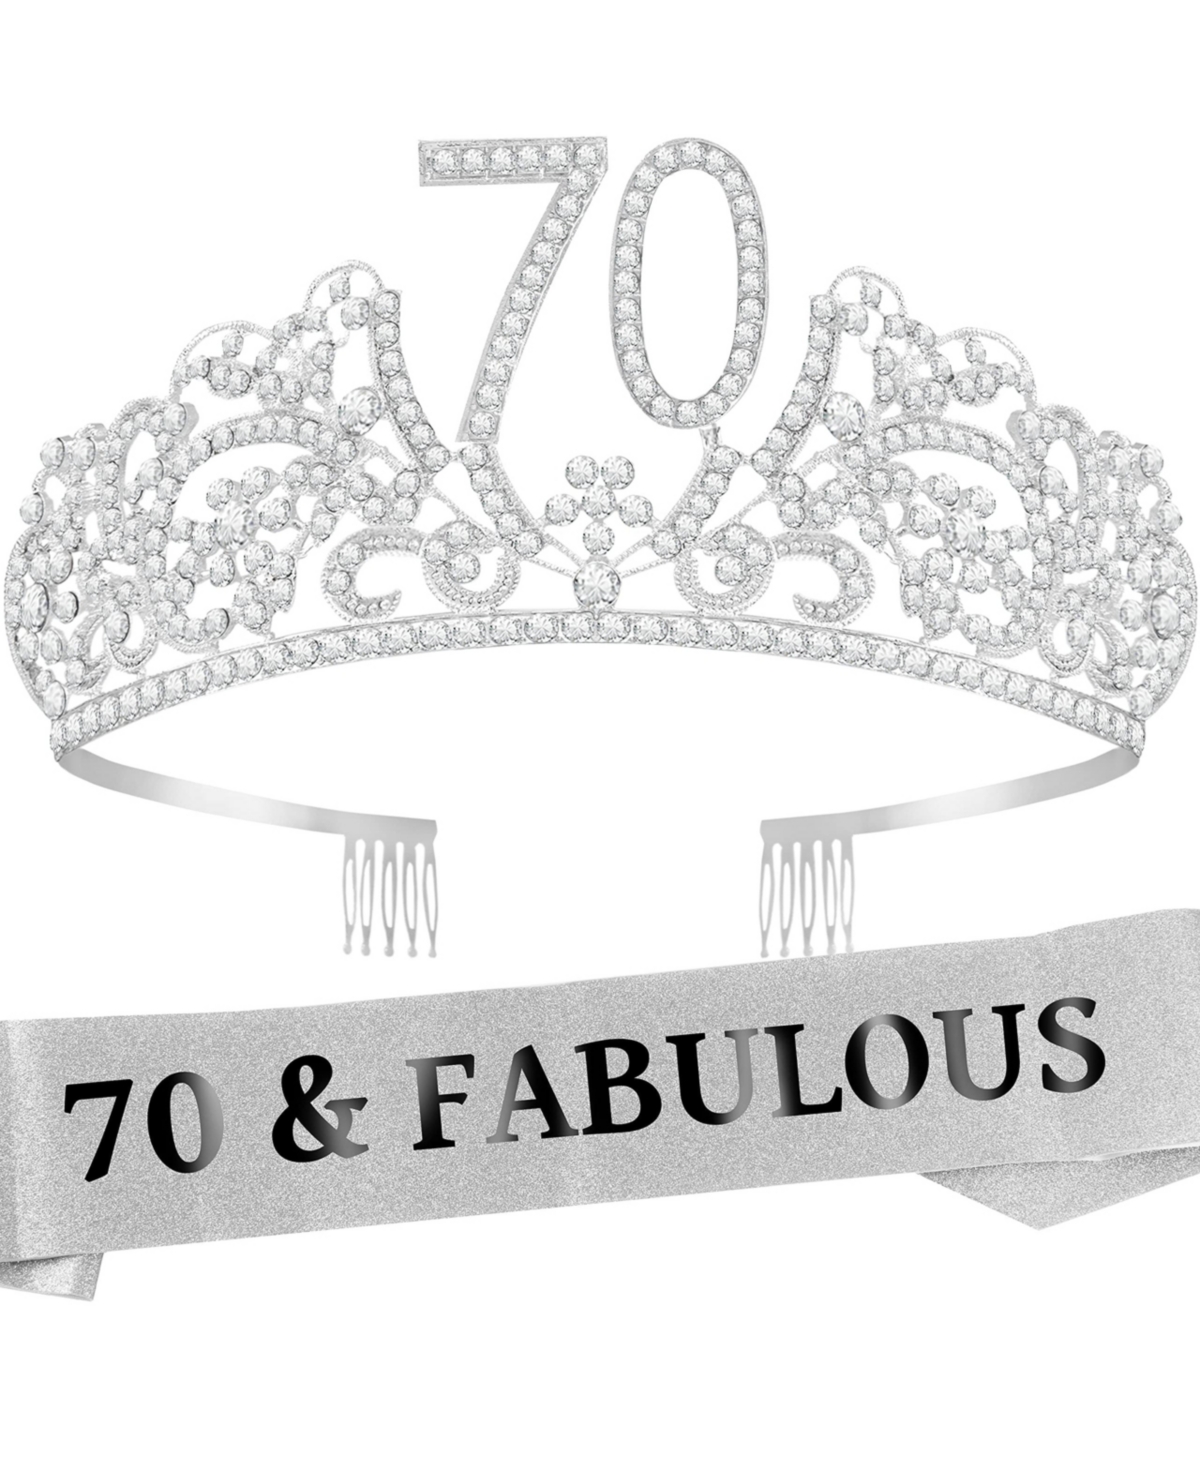 70th Birthday Sash and Tiara for Women - Fabulous Glitter Sash + Flowers Rhinestone Silver Premium Metal Tiara for Her, 70th Birthday Gifts for 70 Cel